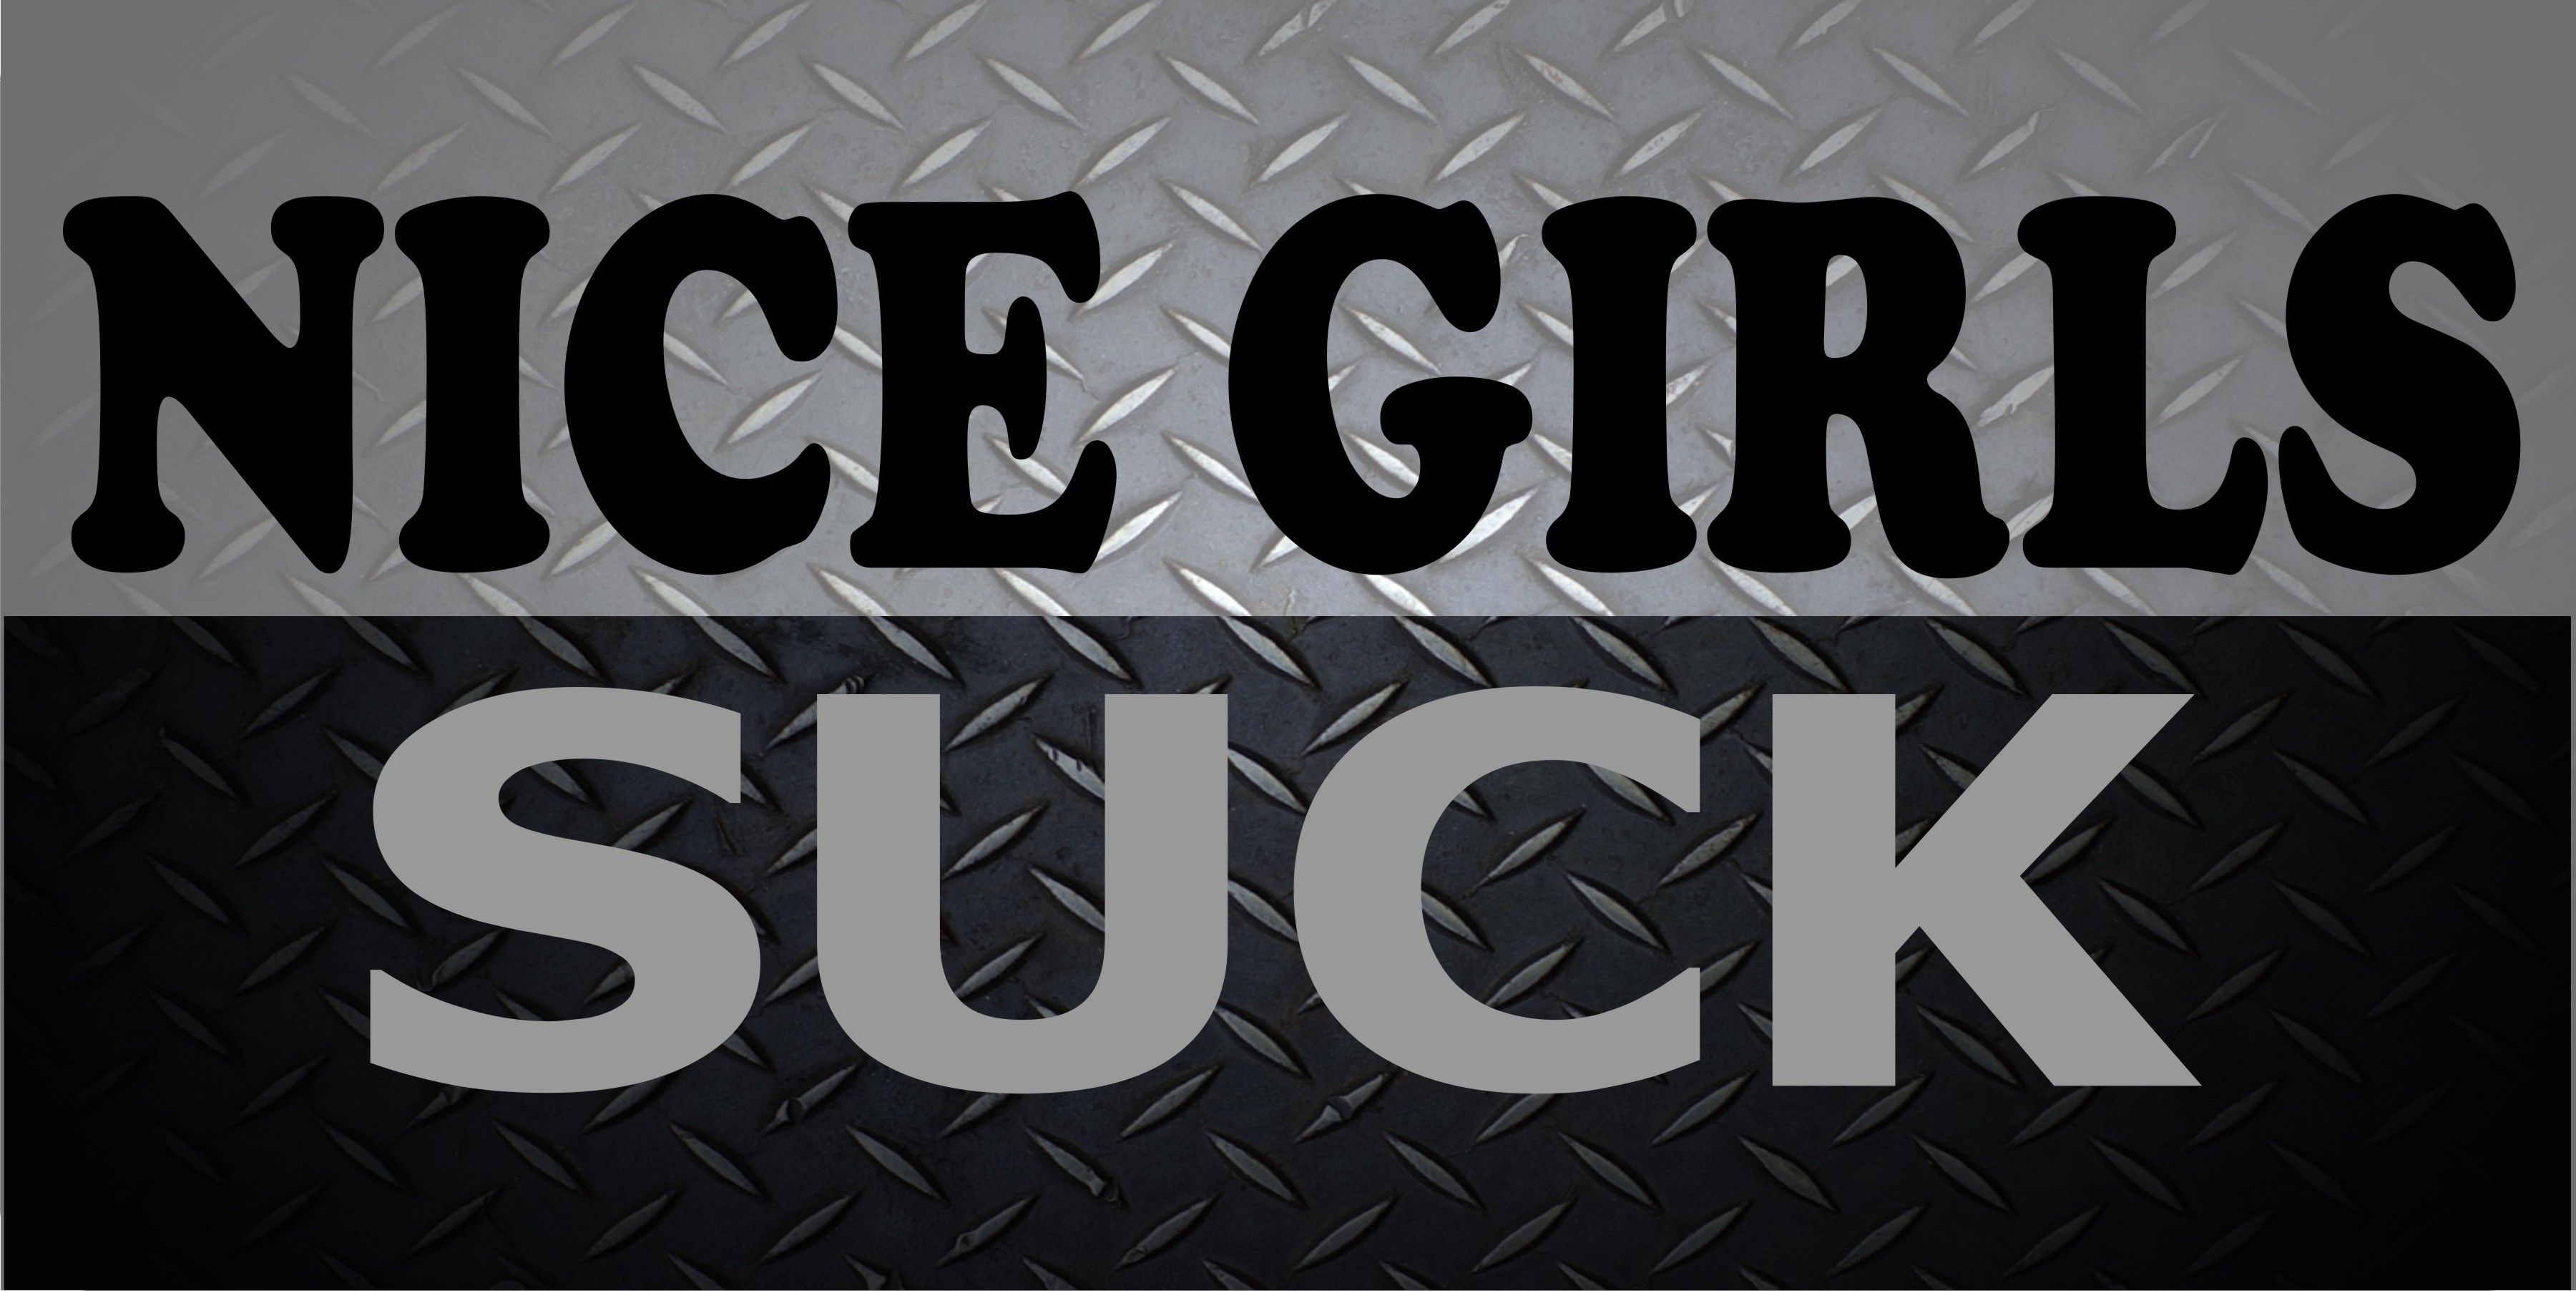 Nice Girls Suck Photo License Plate